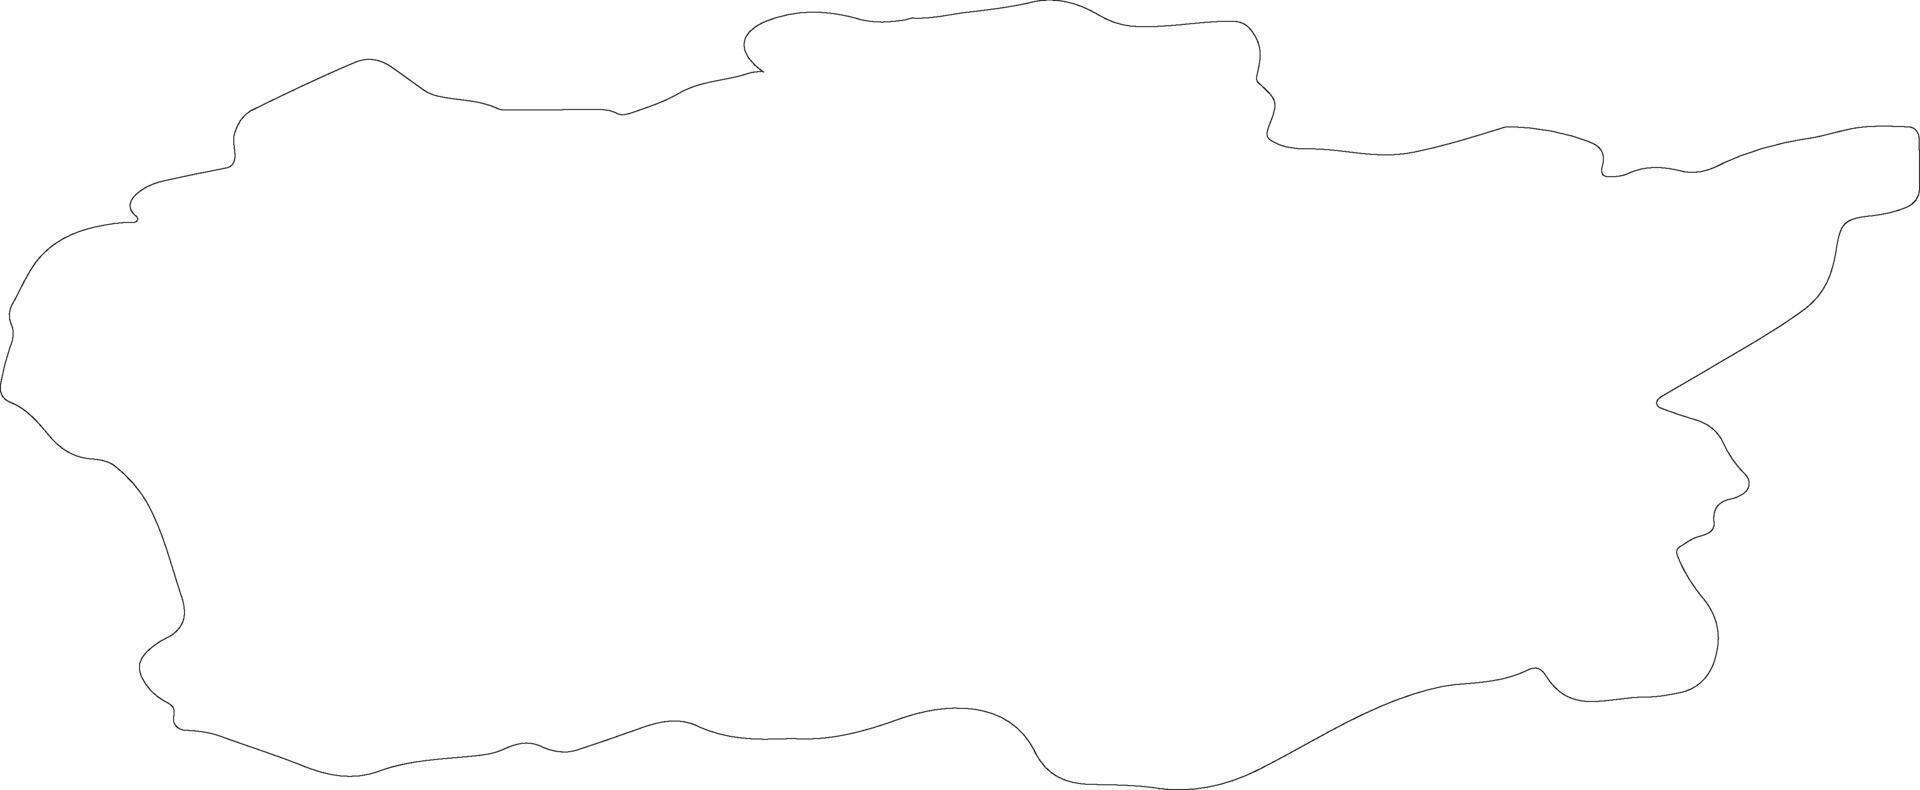 alytaus Litouwen schets kaart vector